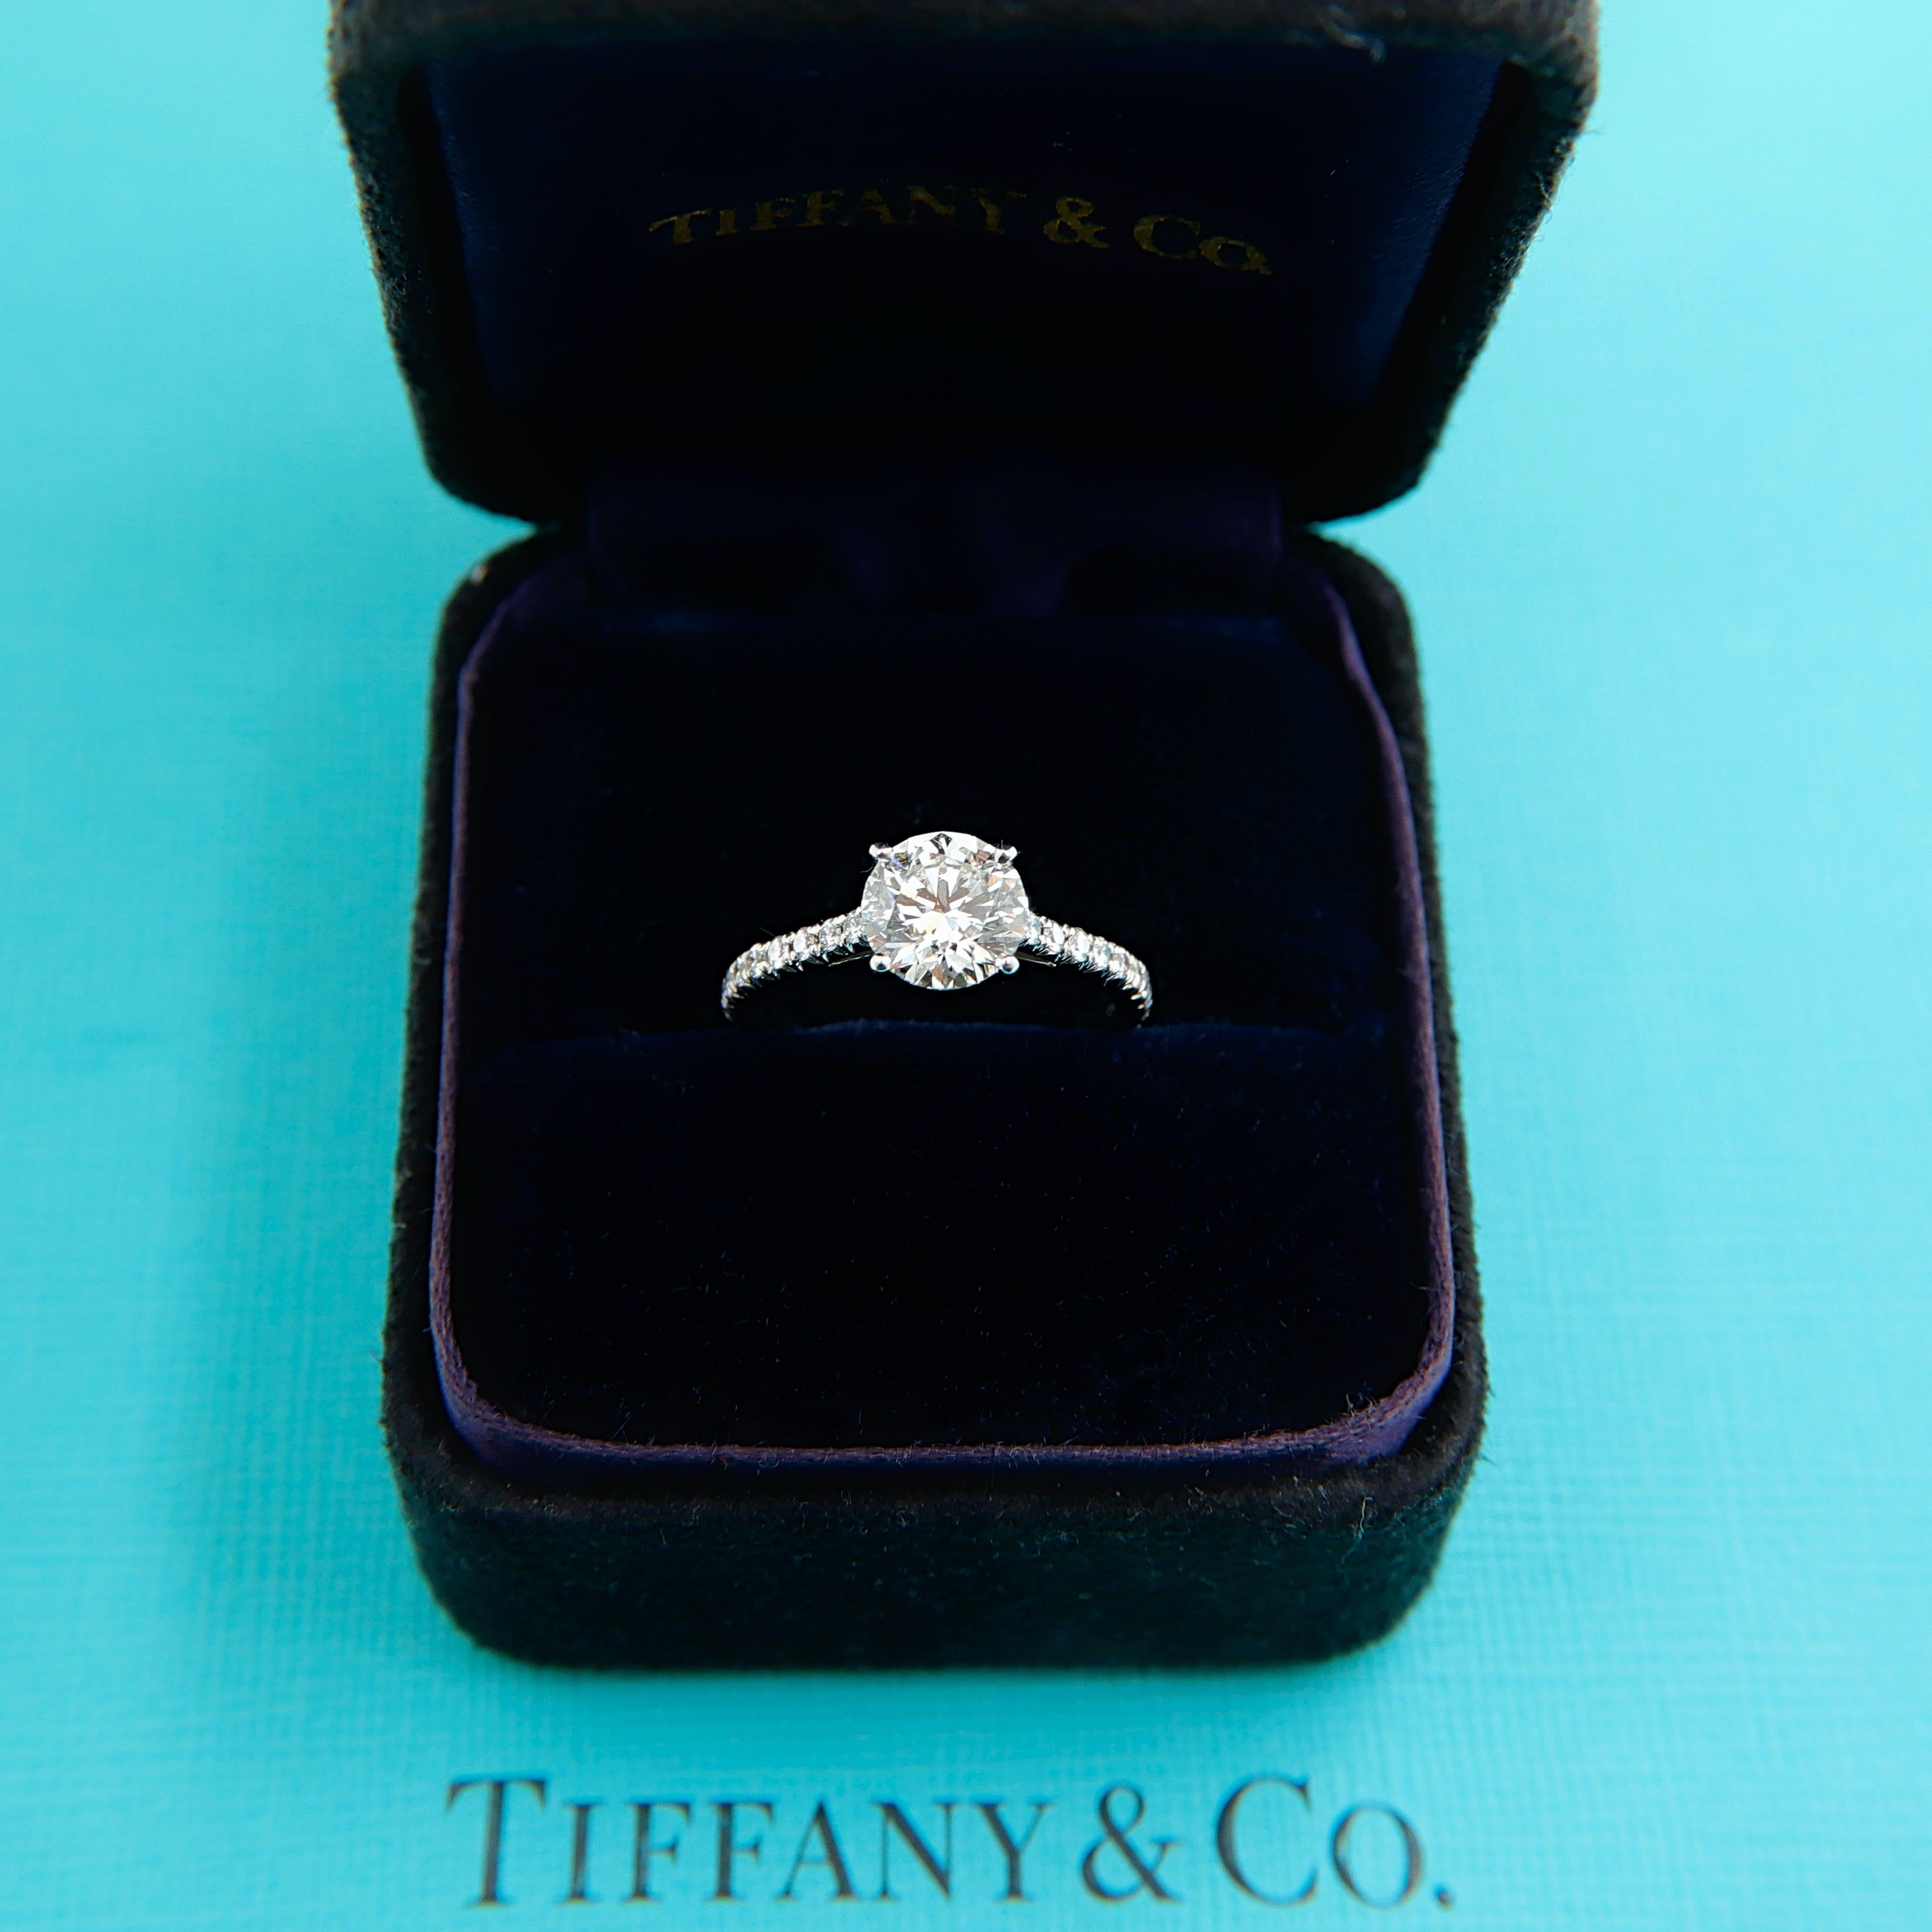 Women's Tiffany & Co. Novo Round Diamond Engagement Ring 1.21 Carat in Platinum